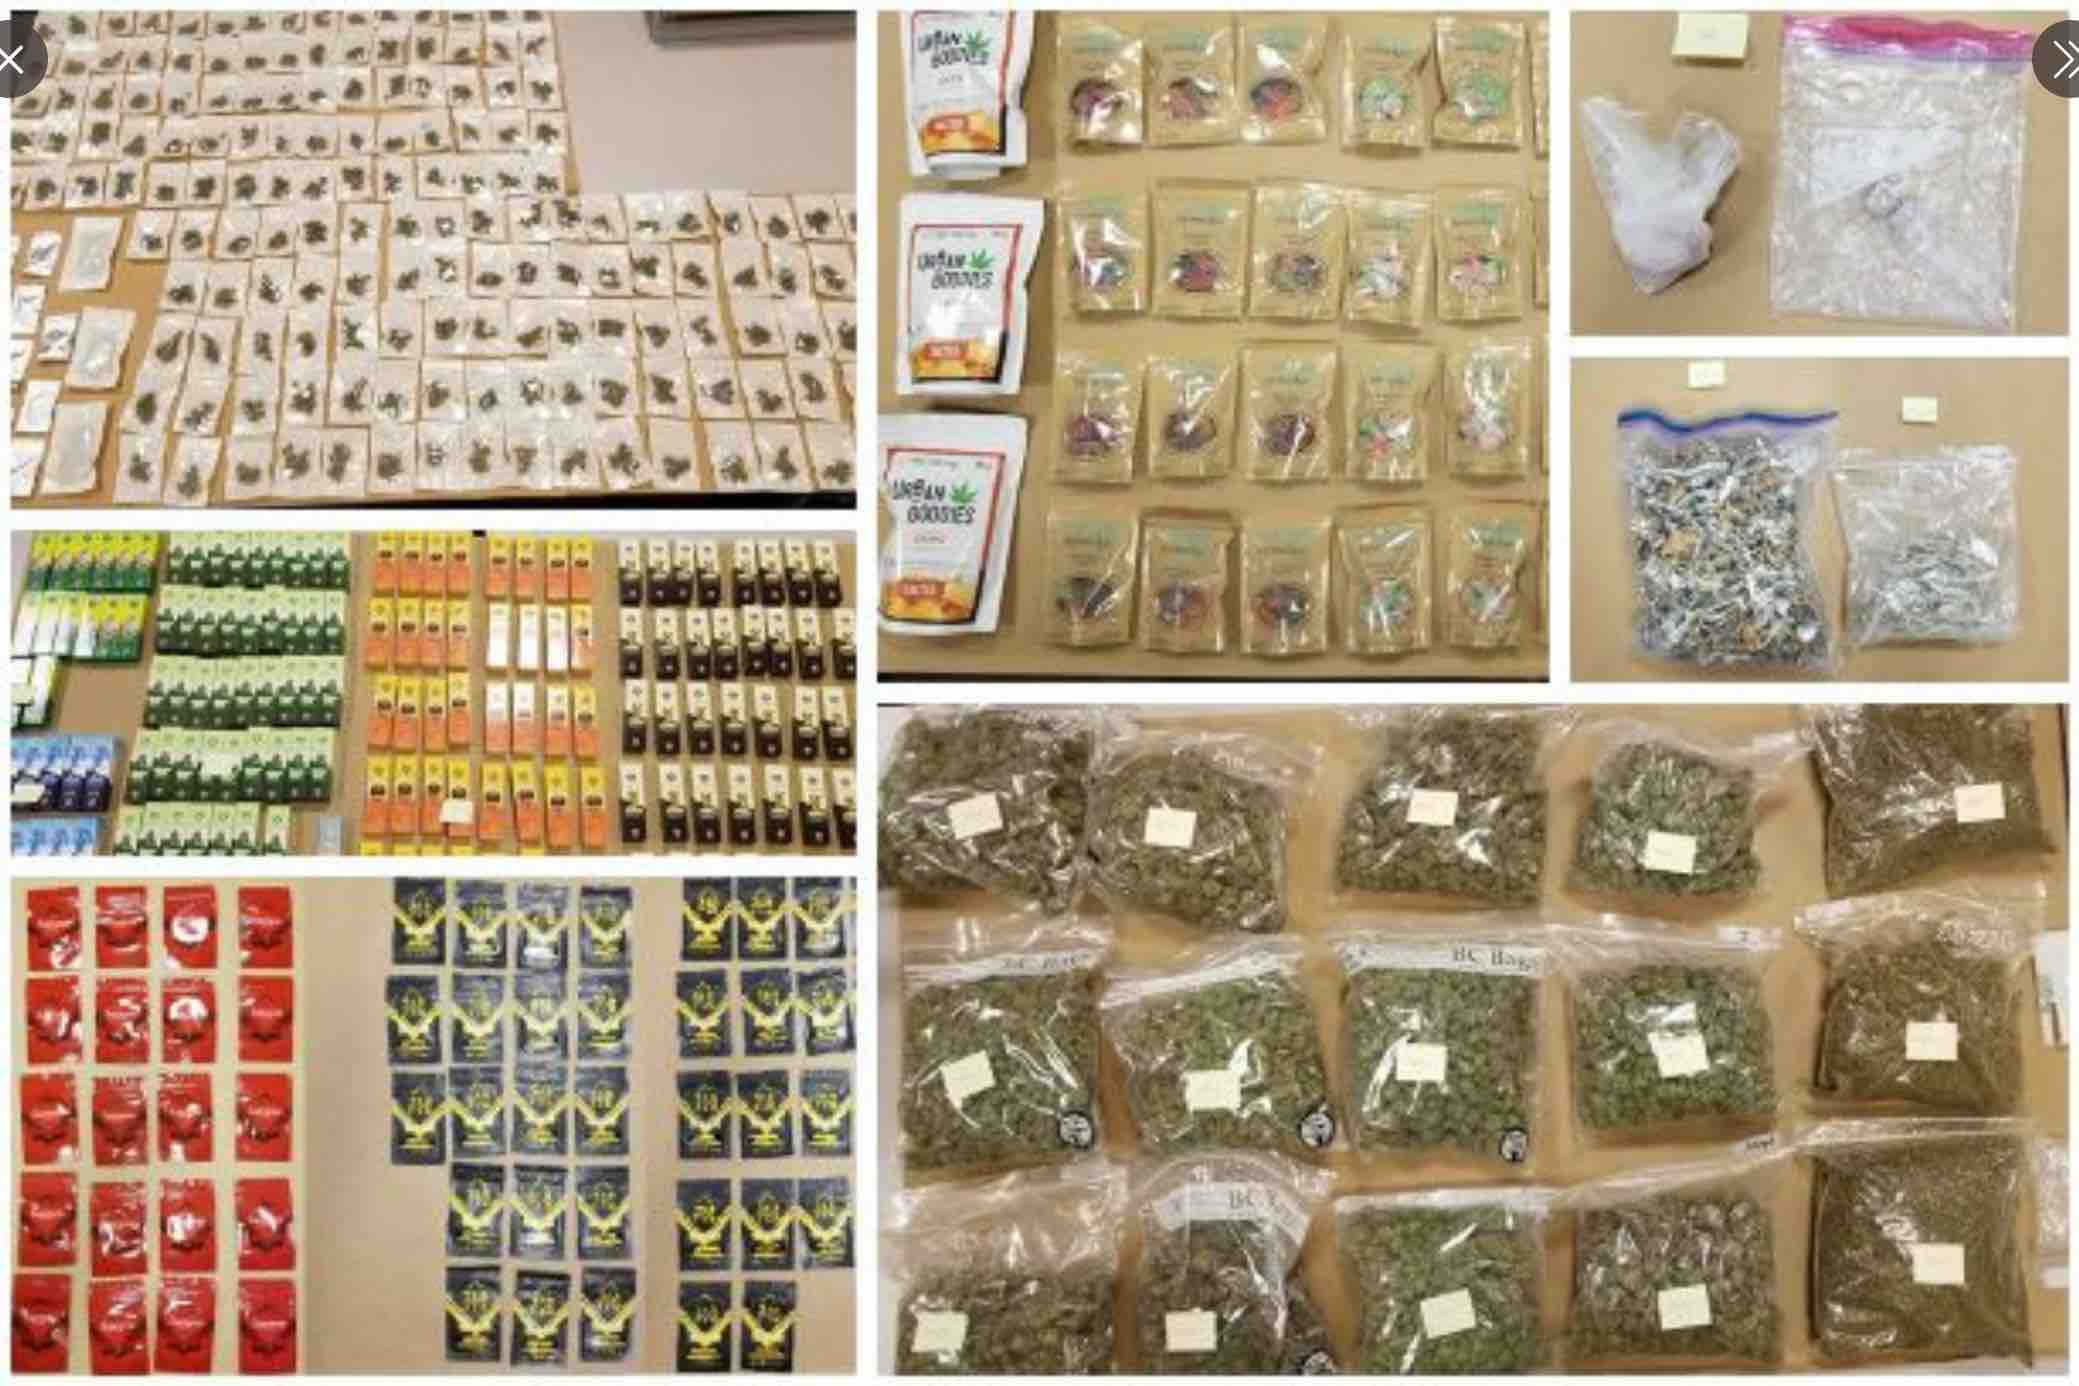 Surrey Drug Unit busts illegal cannabis operation